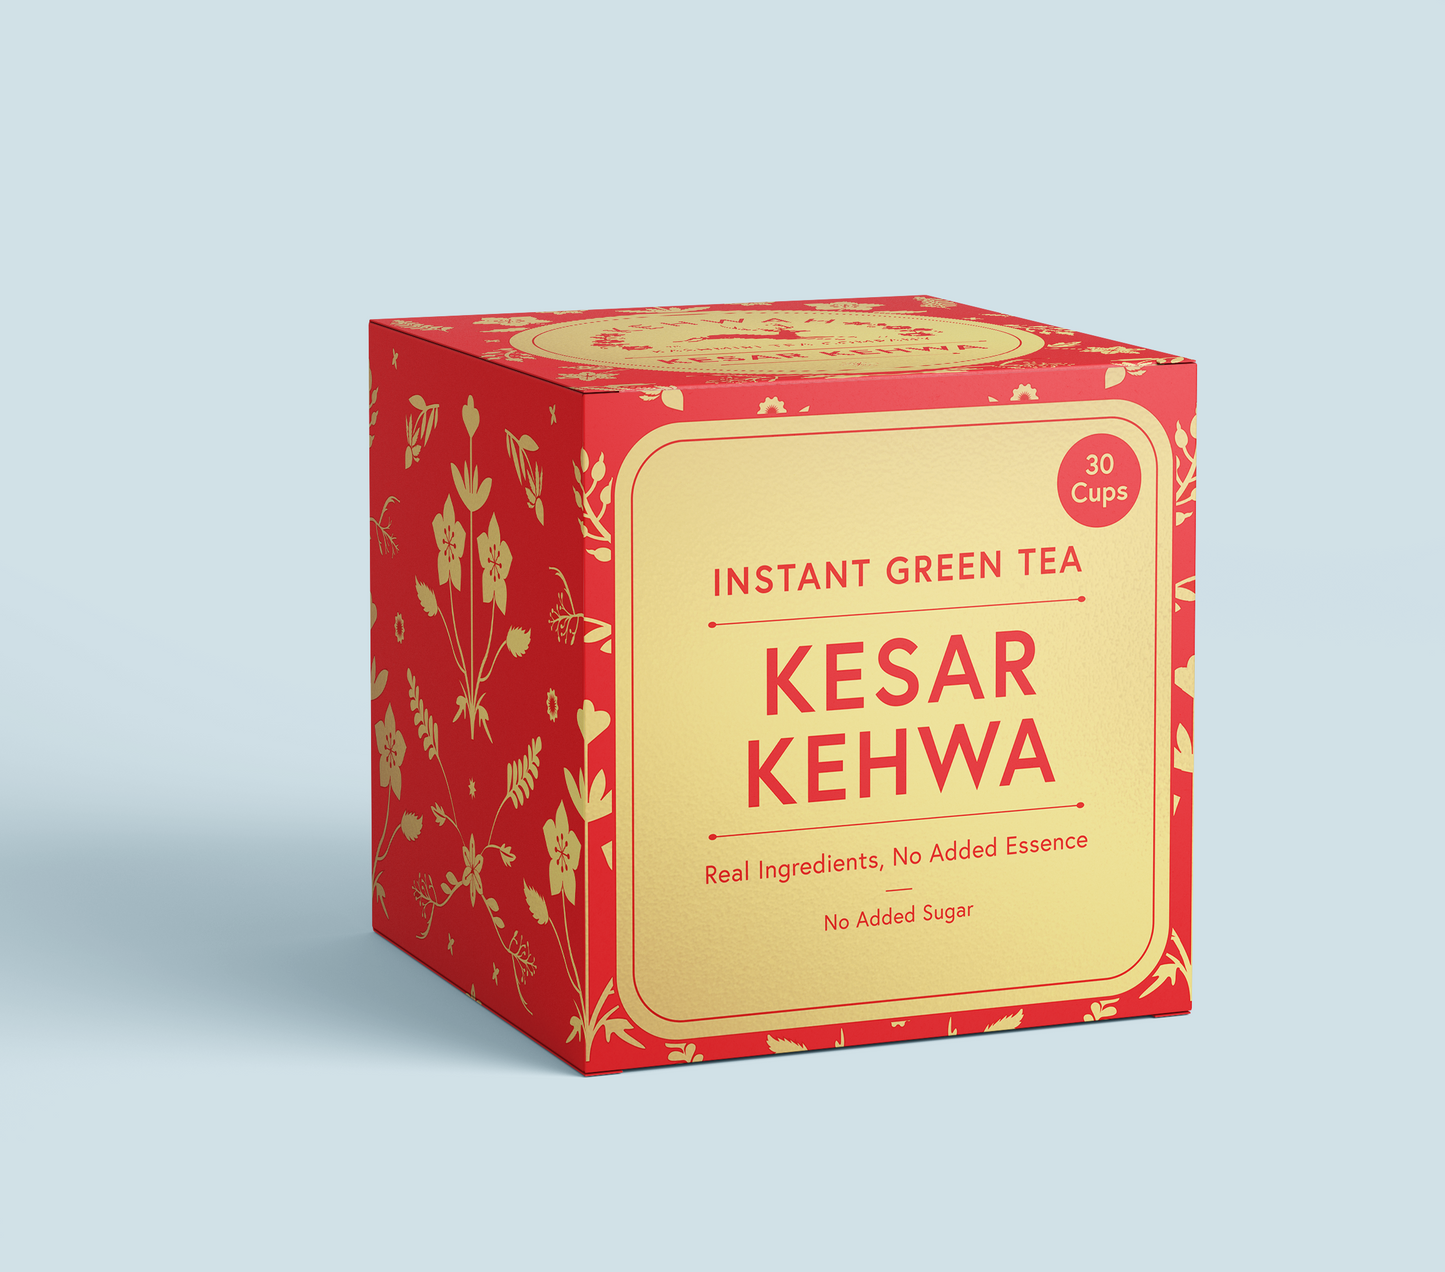 Kehwah Kashmiri kesar kahwa Original Tea | 30 Cups | Saffron, Almonds, Cardamom, Cinnamon | Instant Tea | Helps with Energy, Health and Wellbeing | Kashmiri organic tea No Bloating No Acidity